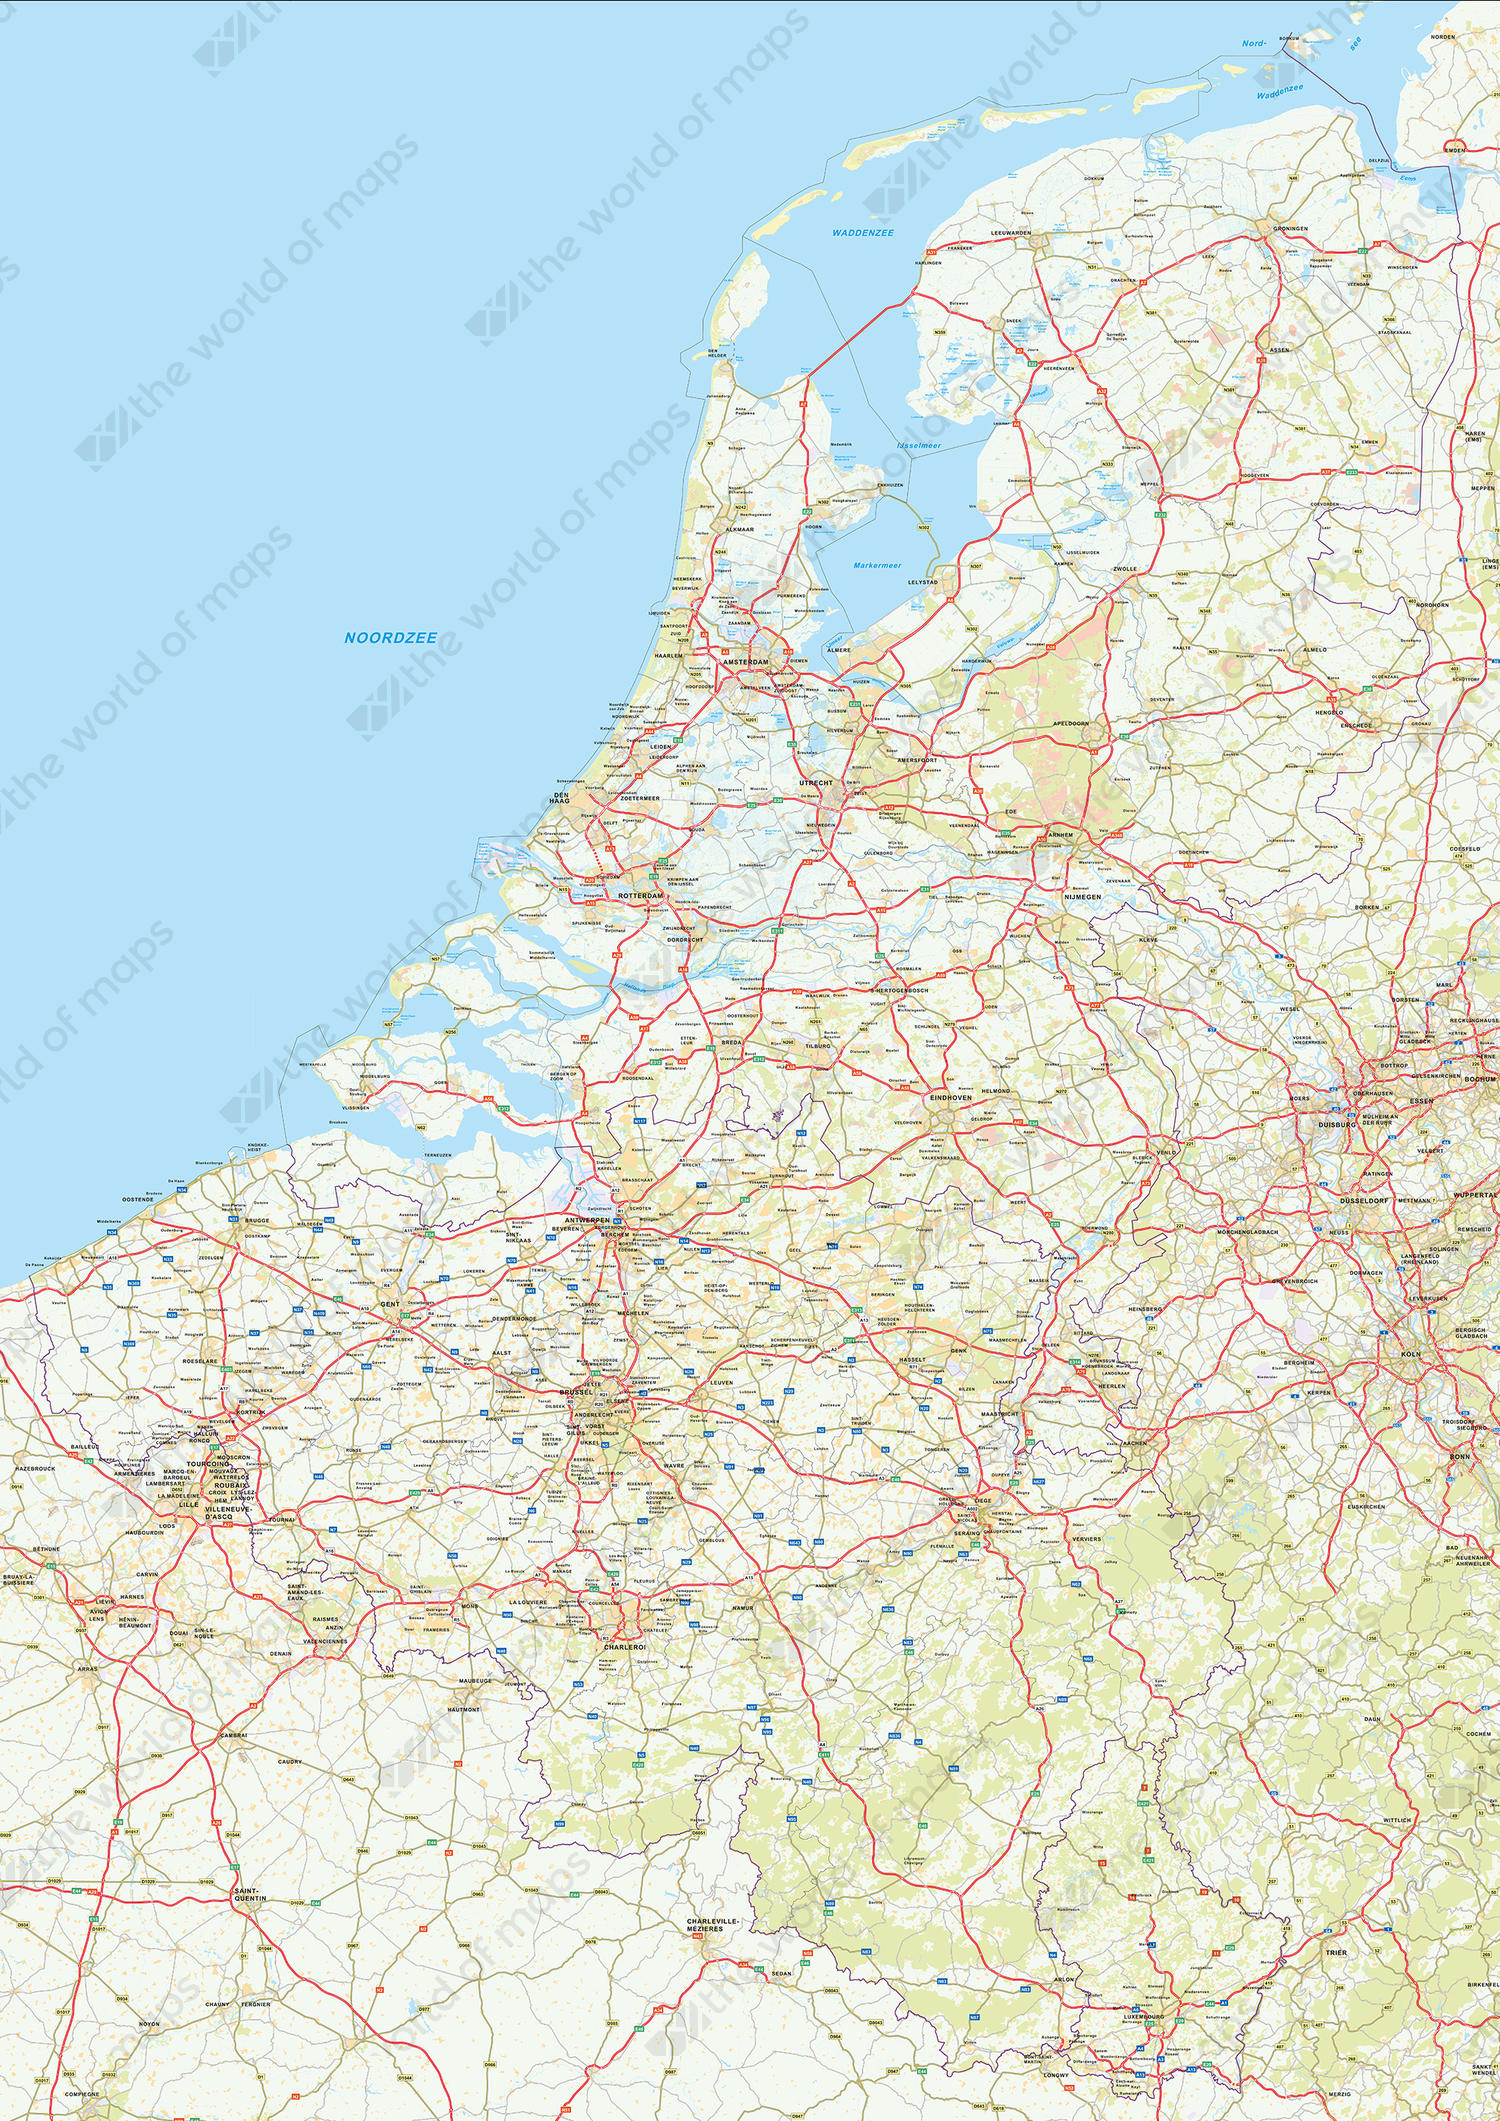 Digital road map Benelux